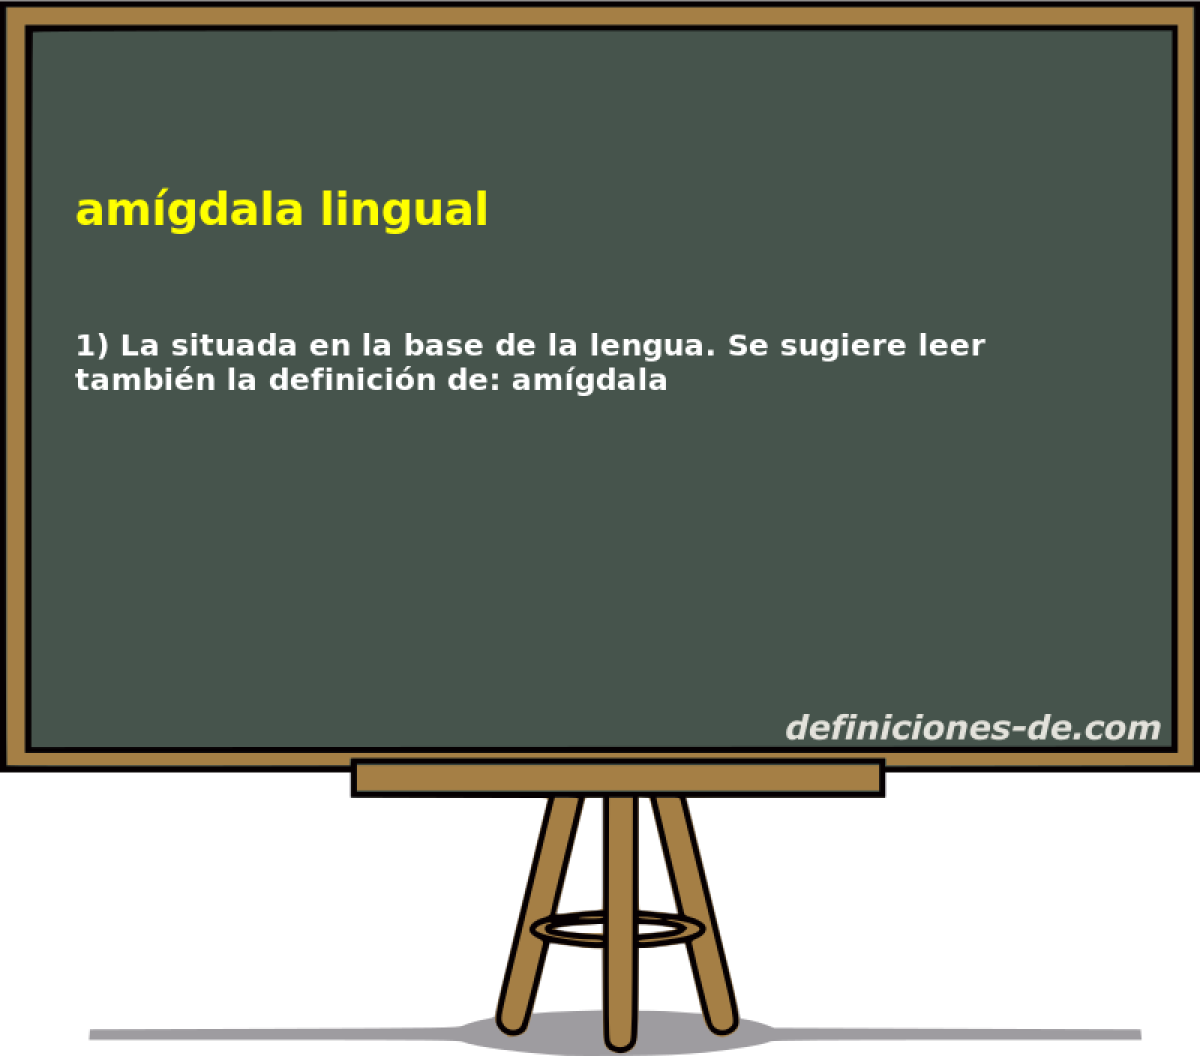 amgdala lingual 